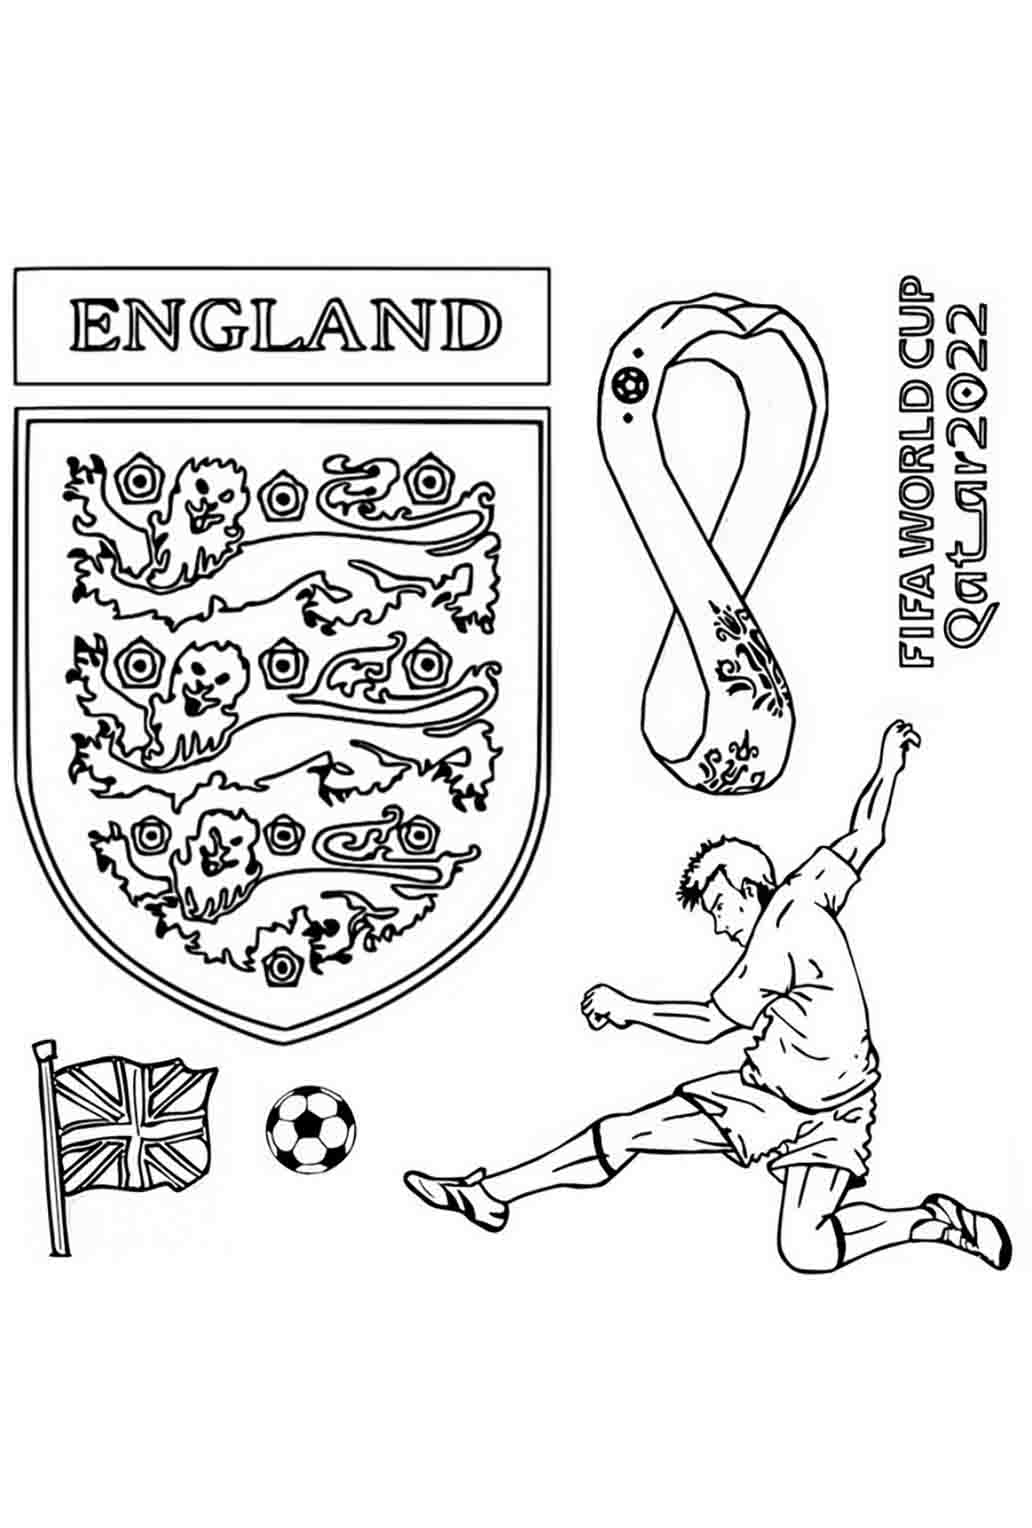 England fifa world cup 2022